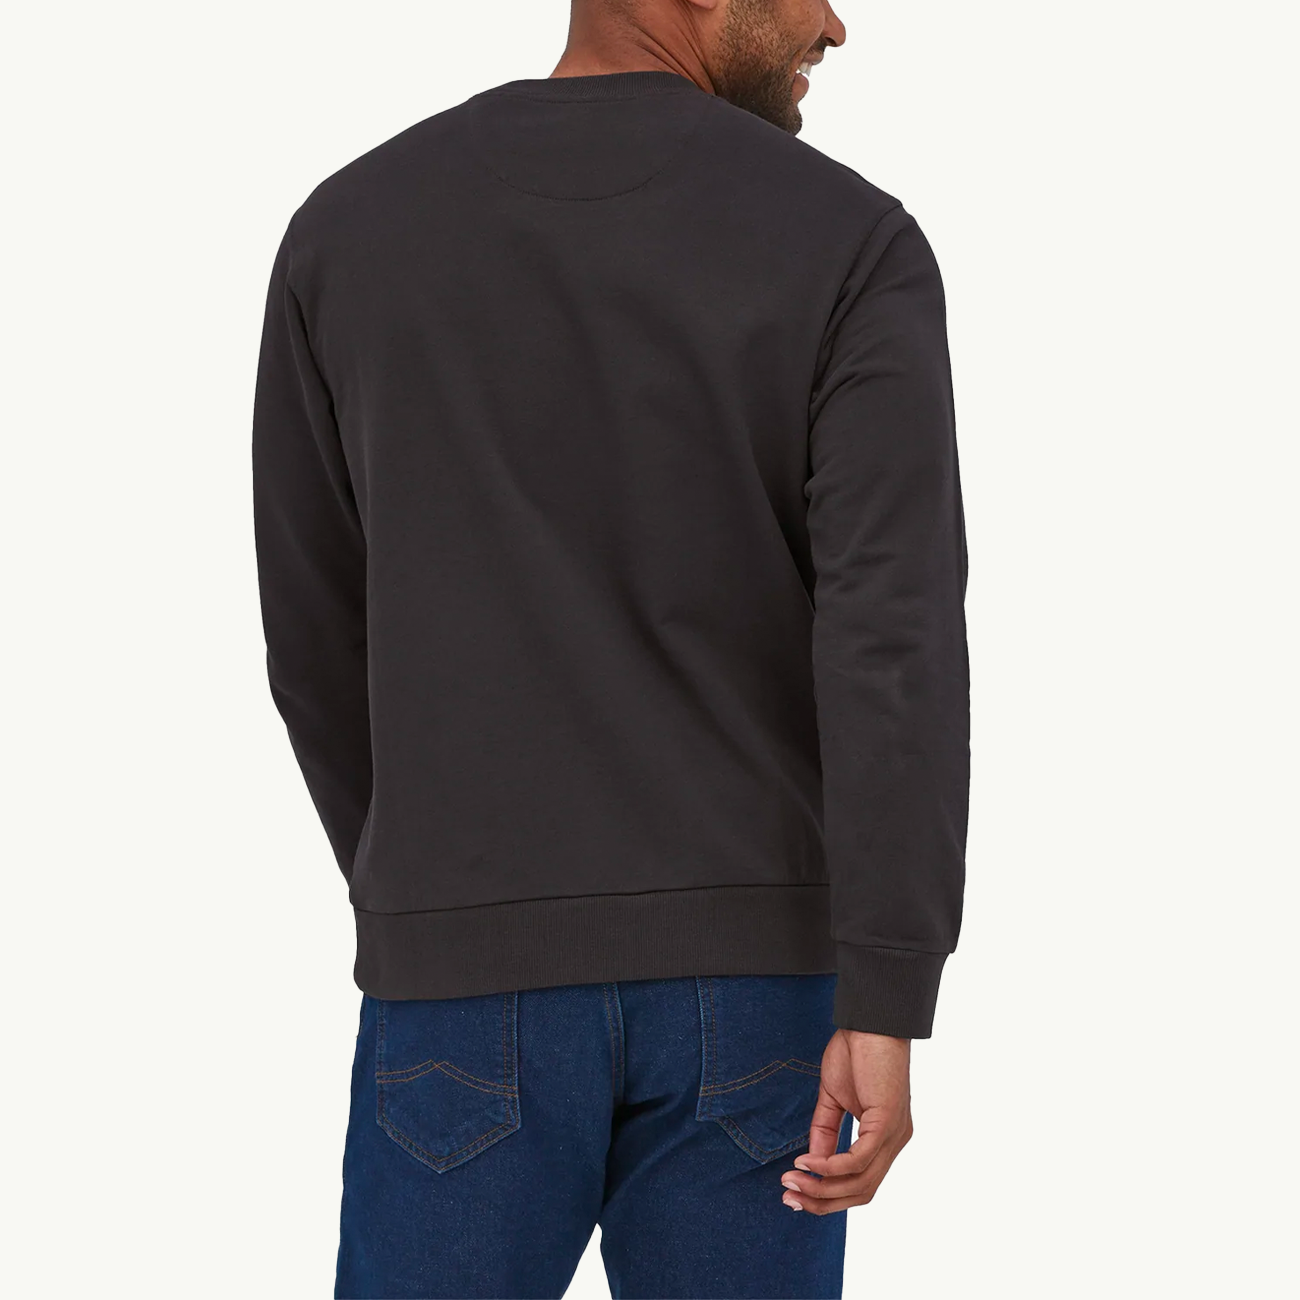 Regenerative Organic Certified Cotton Crewneck Sweatshirt - Ink Black